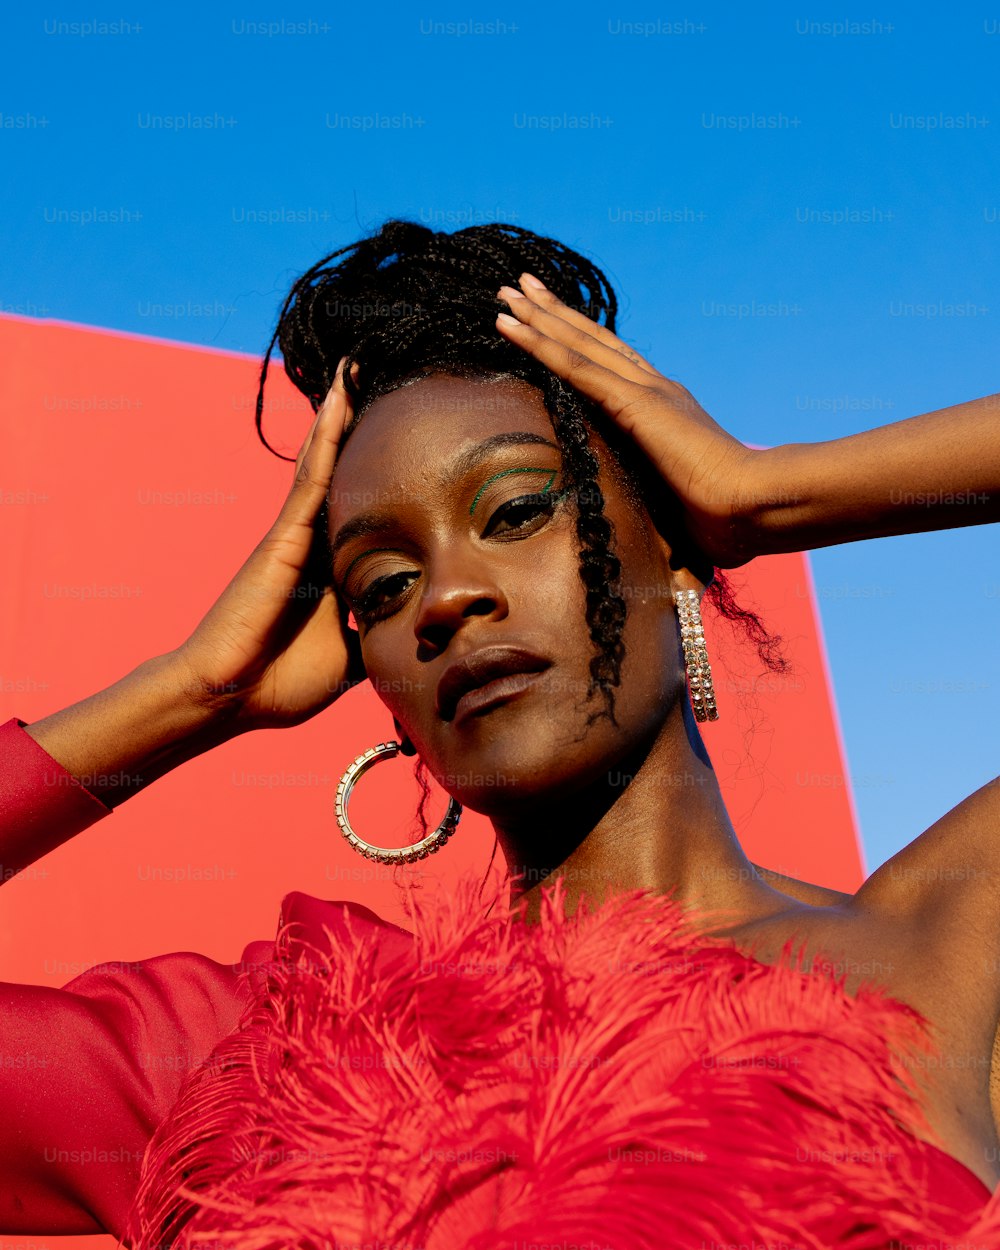 100+] Beautiful Black Women Pictures